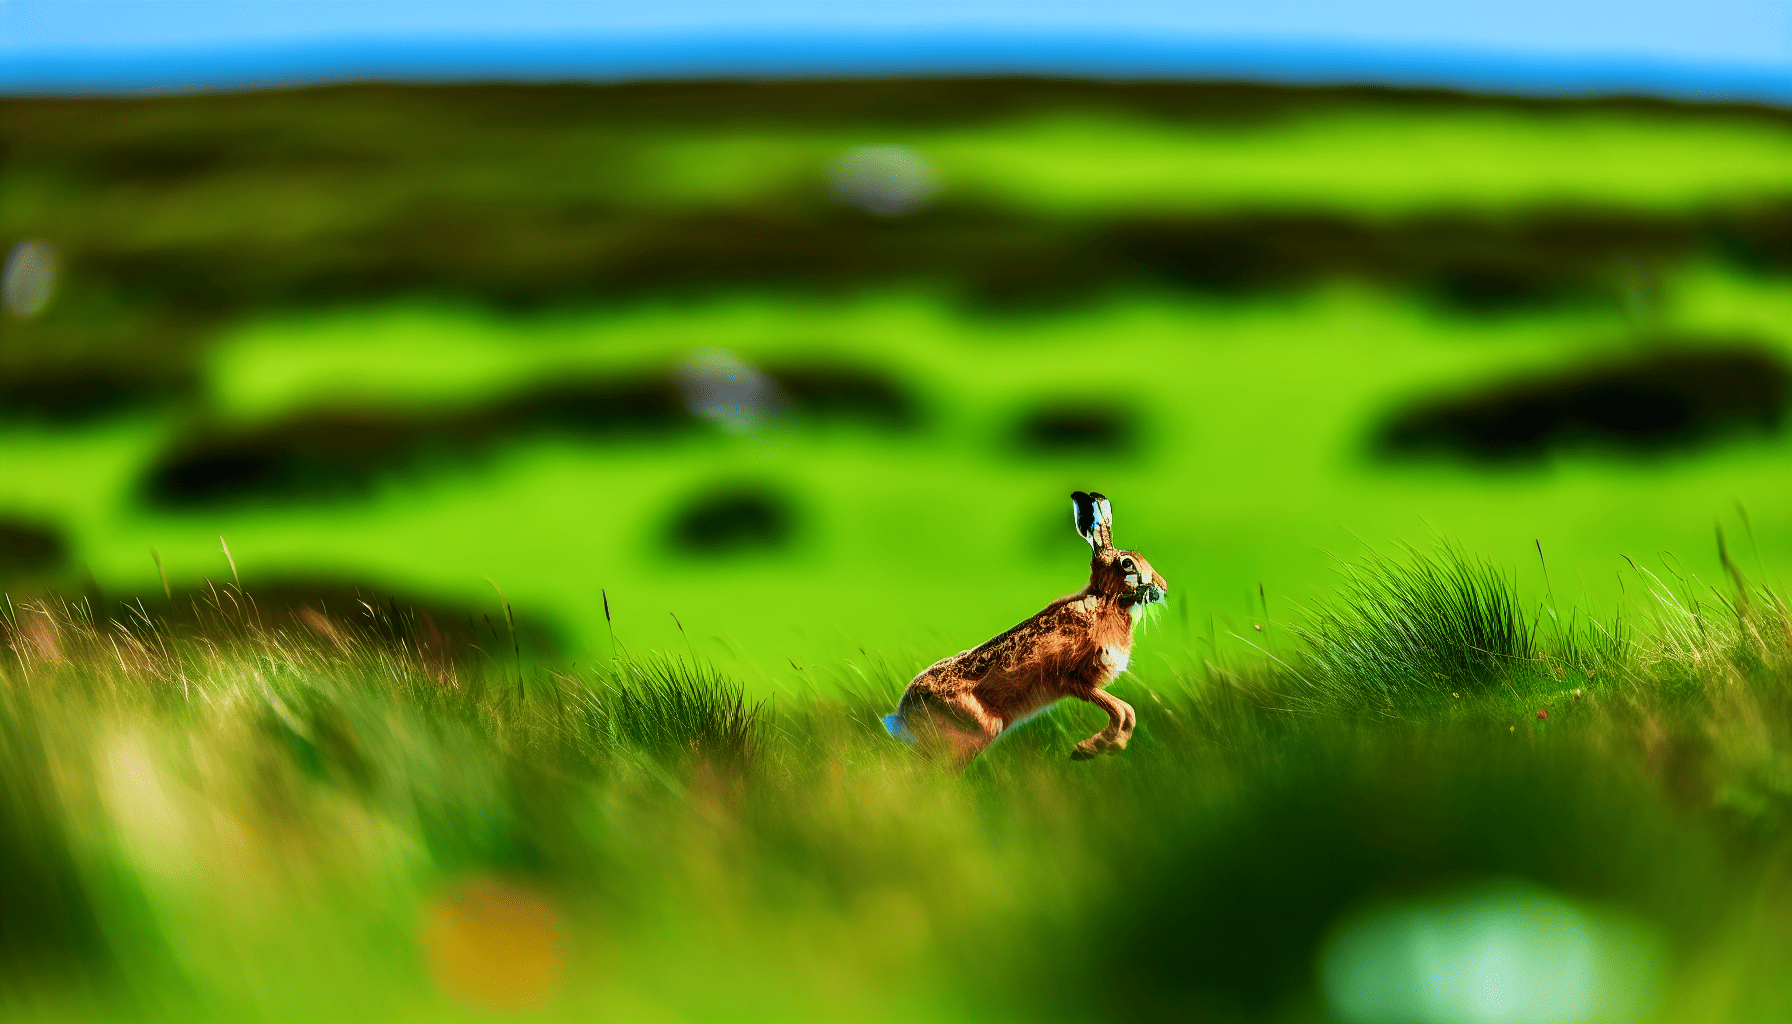 A beautiful Irish hare in its natural habitat